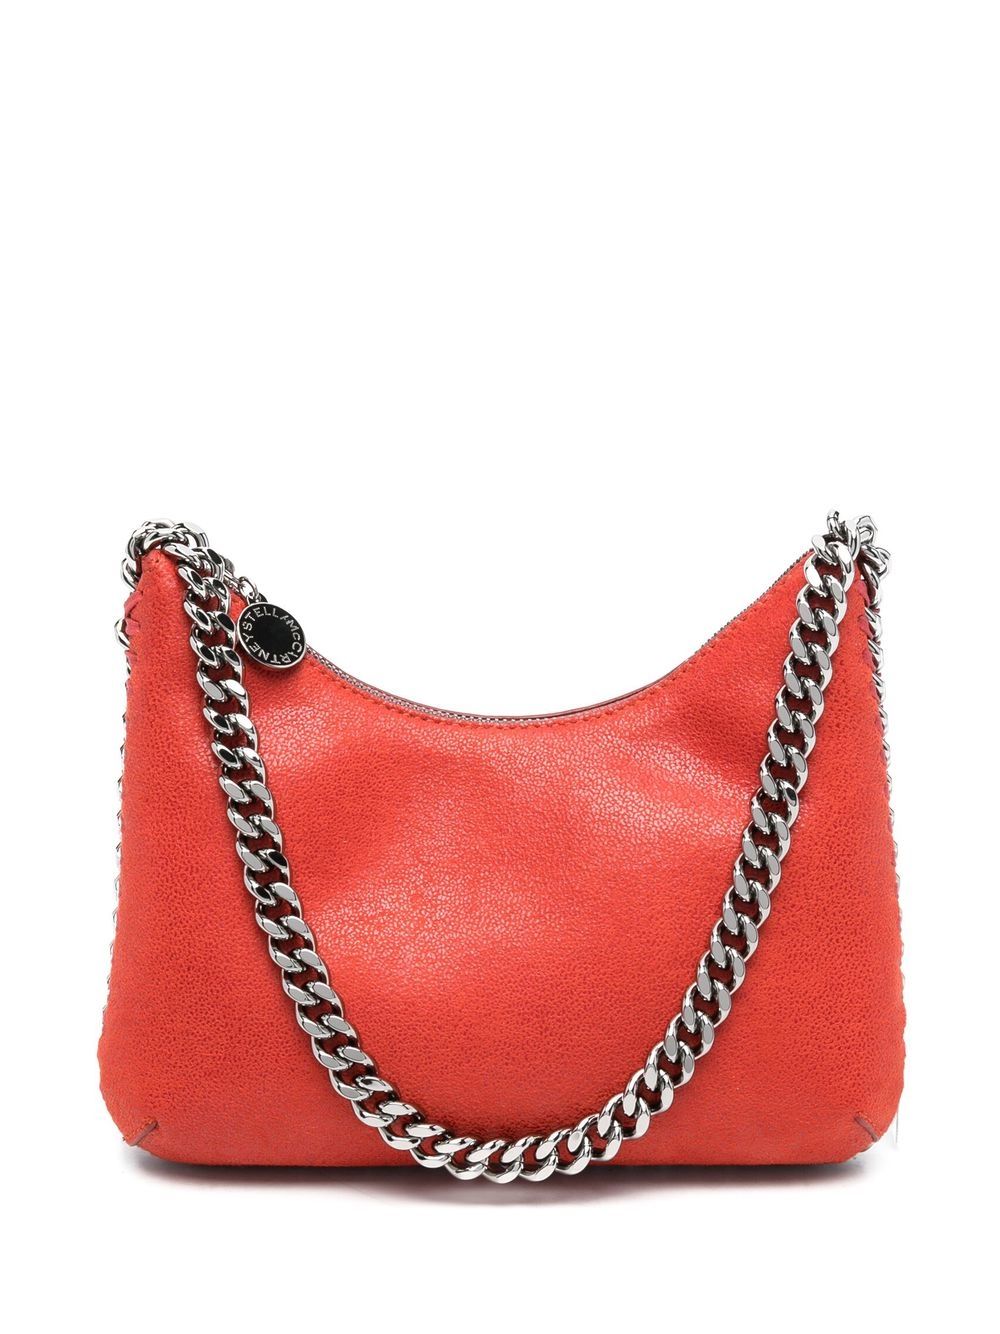 Stella McCartney mini Falabella zip shoulder bag - Red